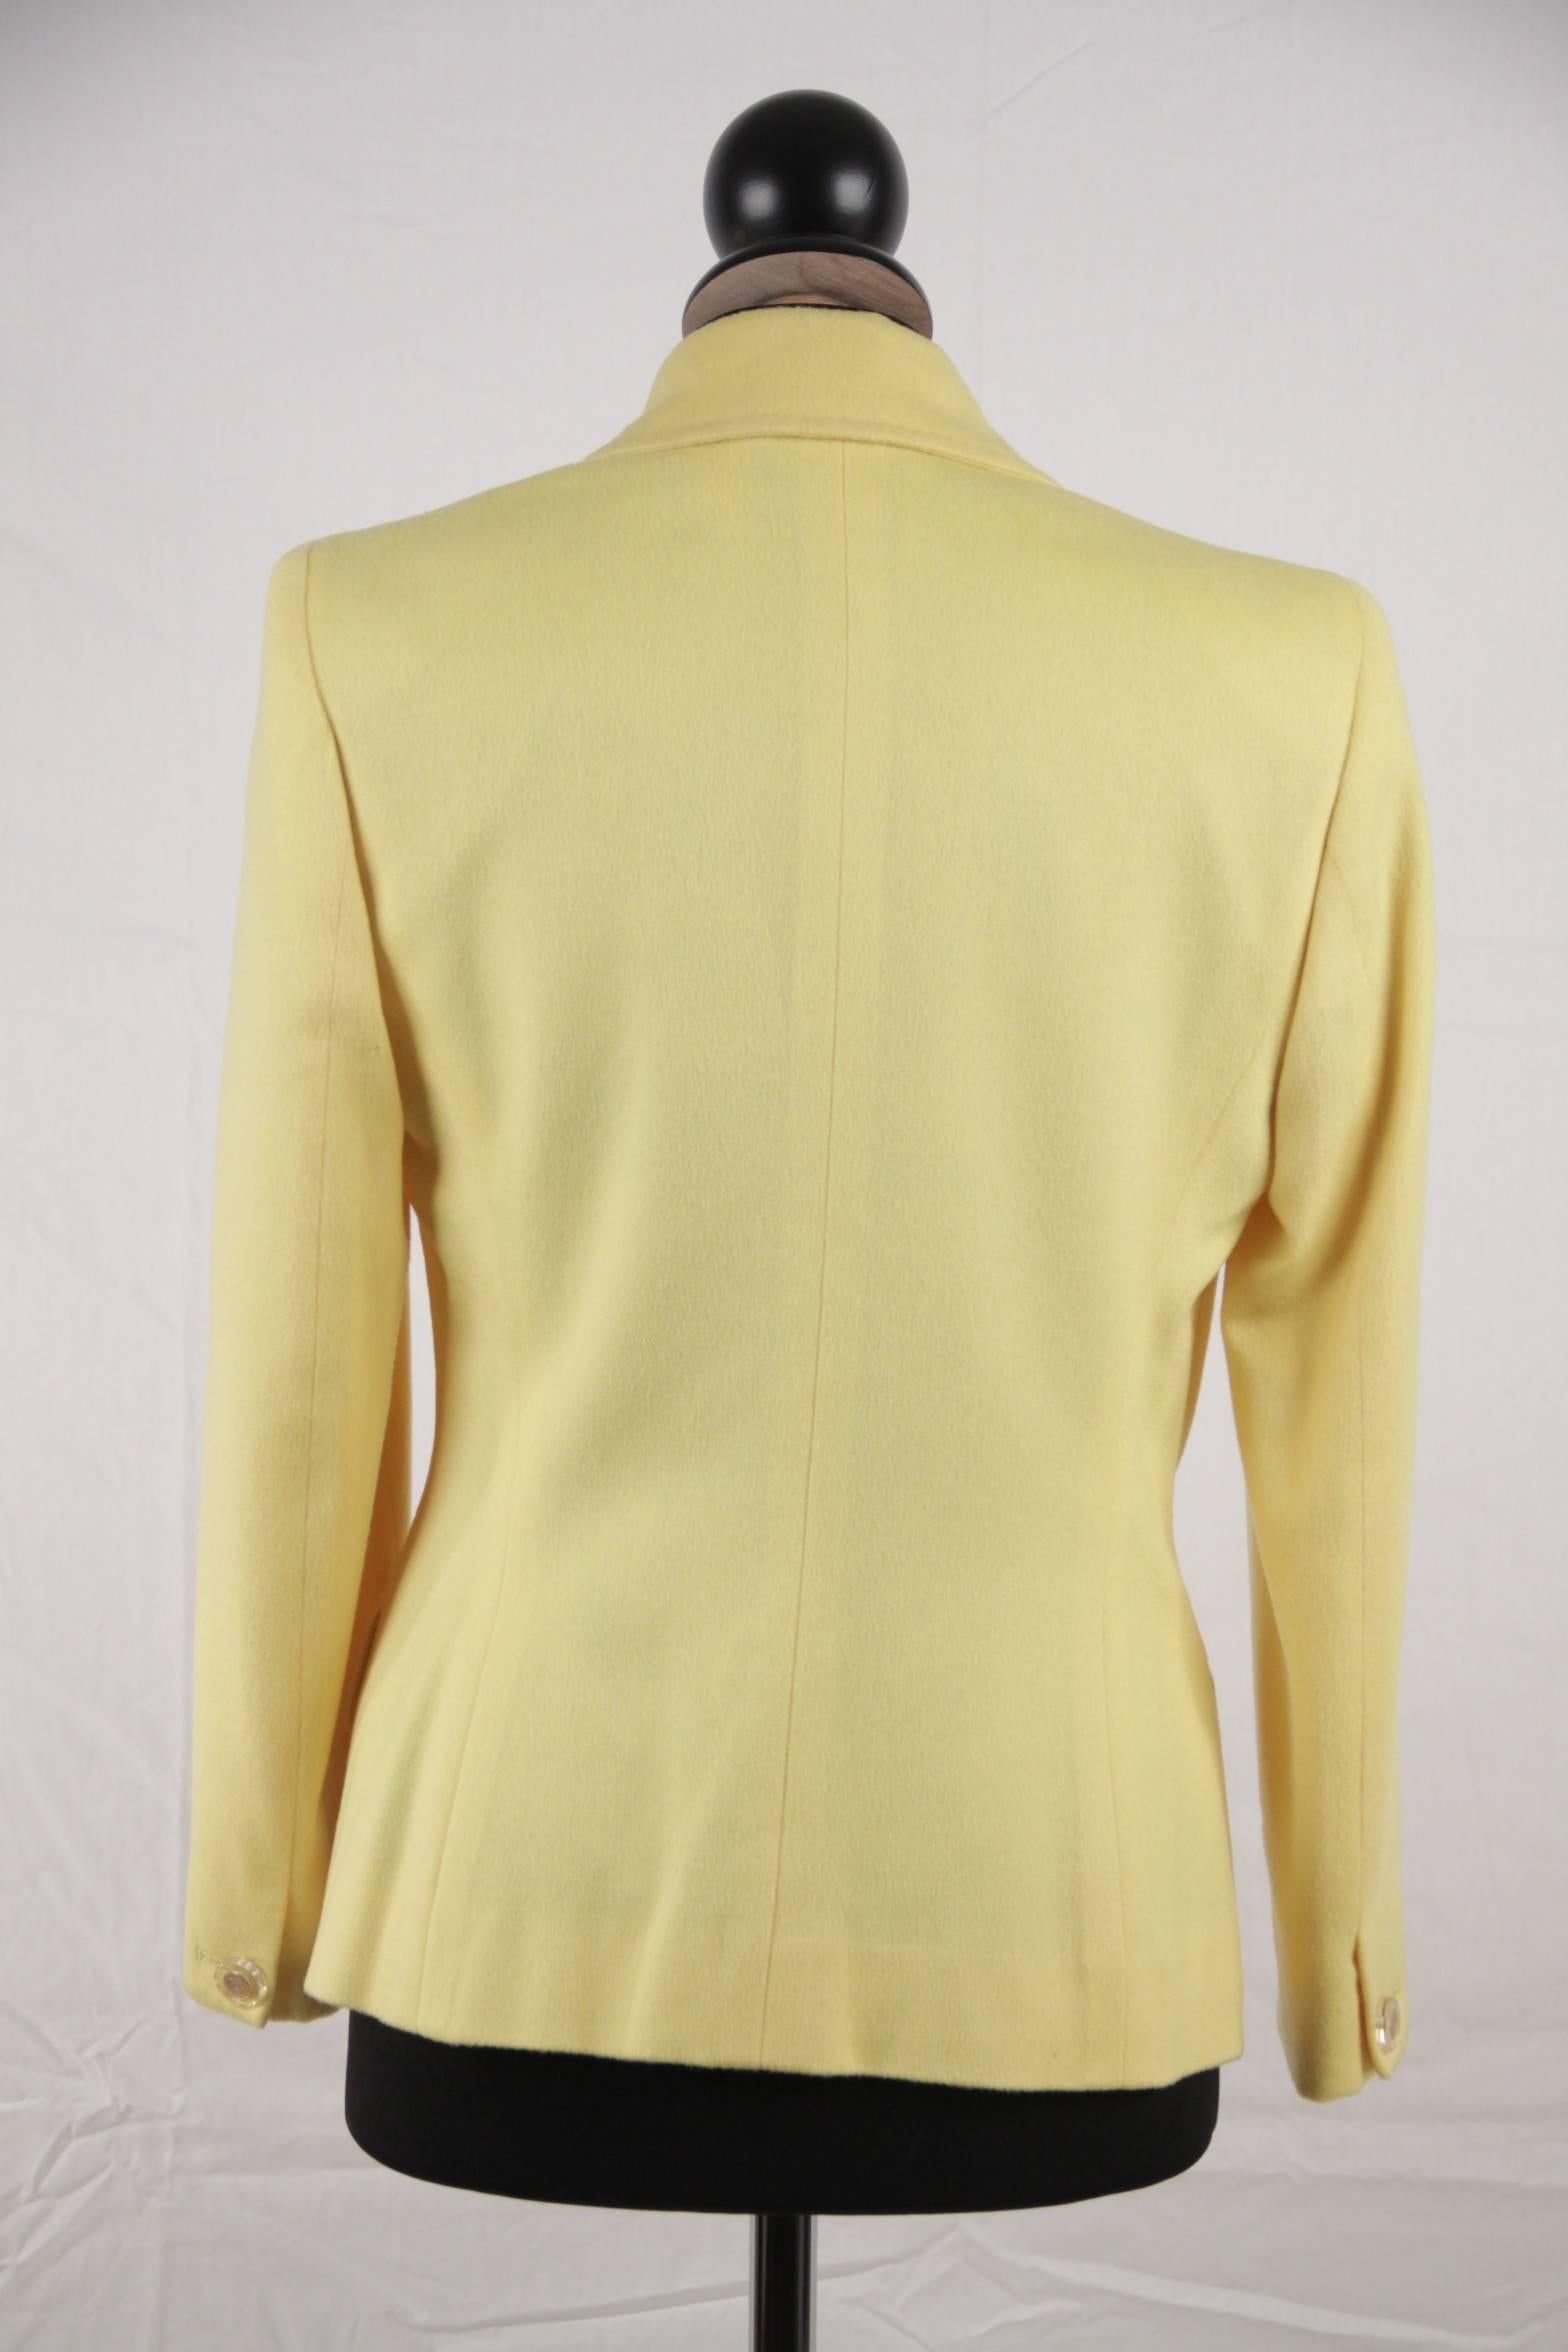 VERSACE Bright Yellow Cashmere Blend BLAZER Jacket SIZE 40 1